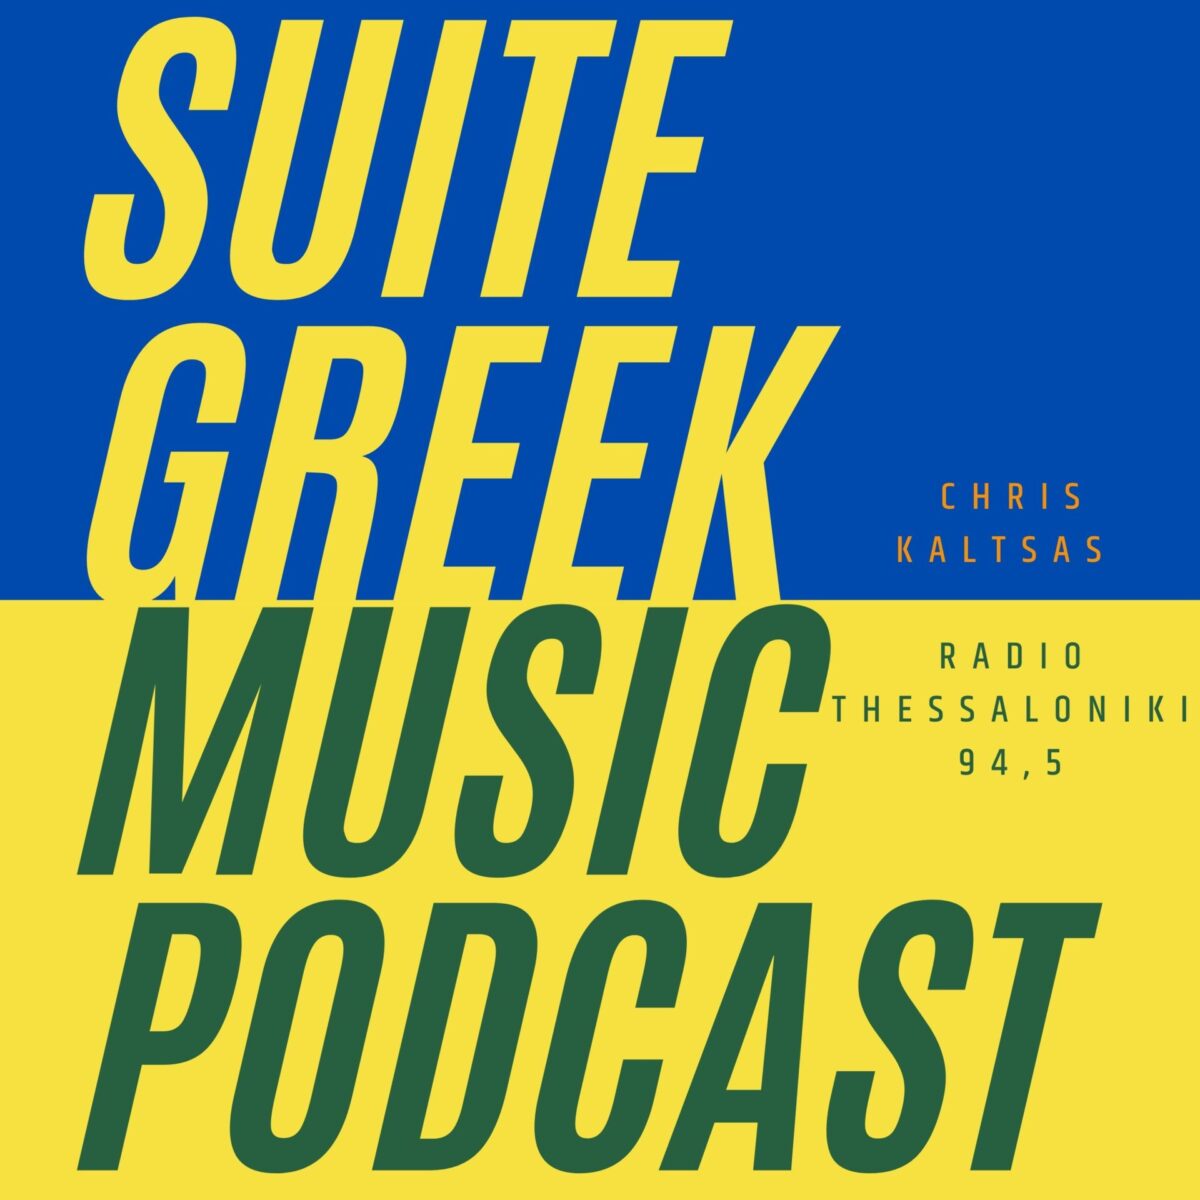 Suite Greek Music podcast με τον Χρίστο Καλτσά στο Ράδιο Θεσσαλονίκη 94,5 S03E07